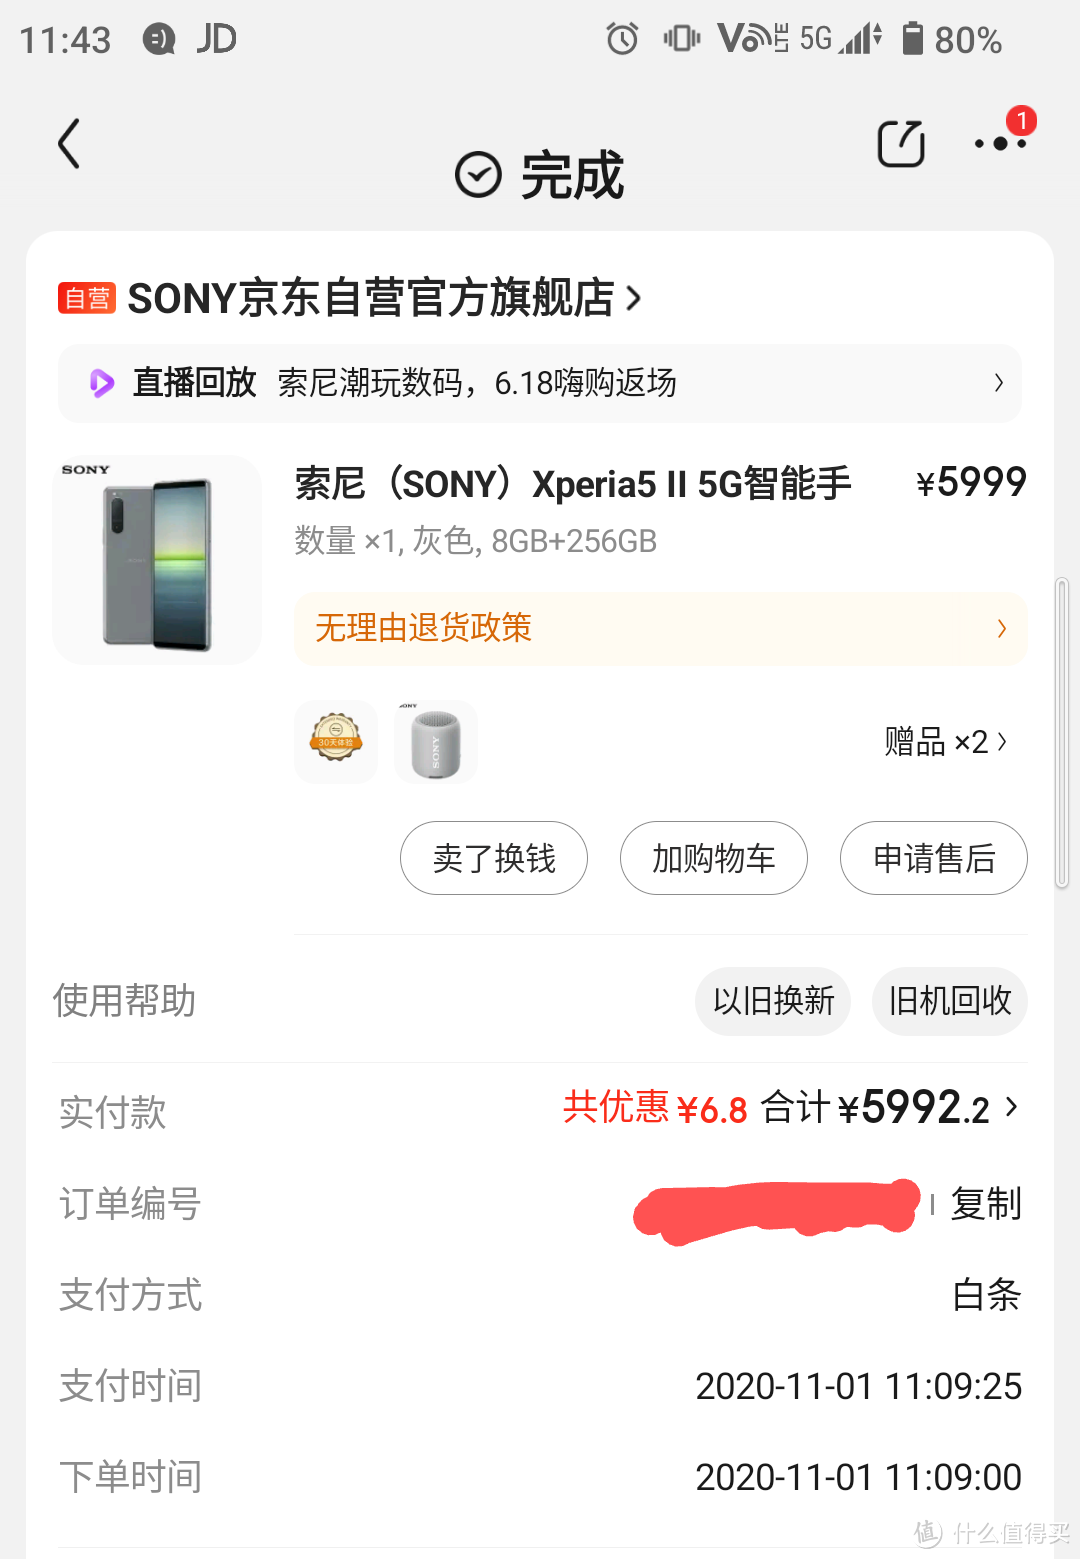 Sony Xperia 5 Ⅱ 两年多的使用体验